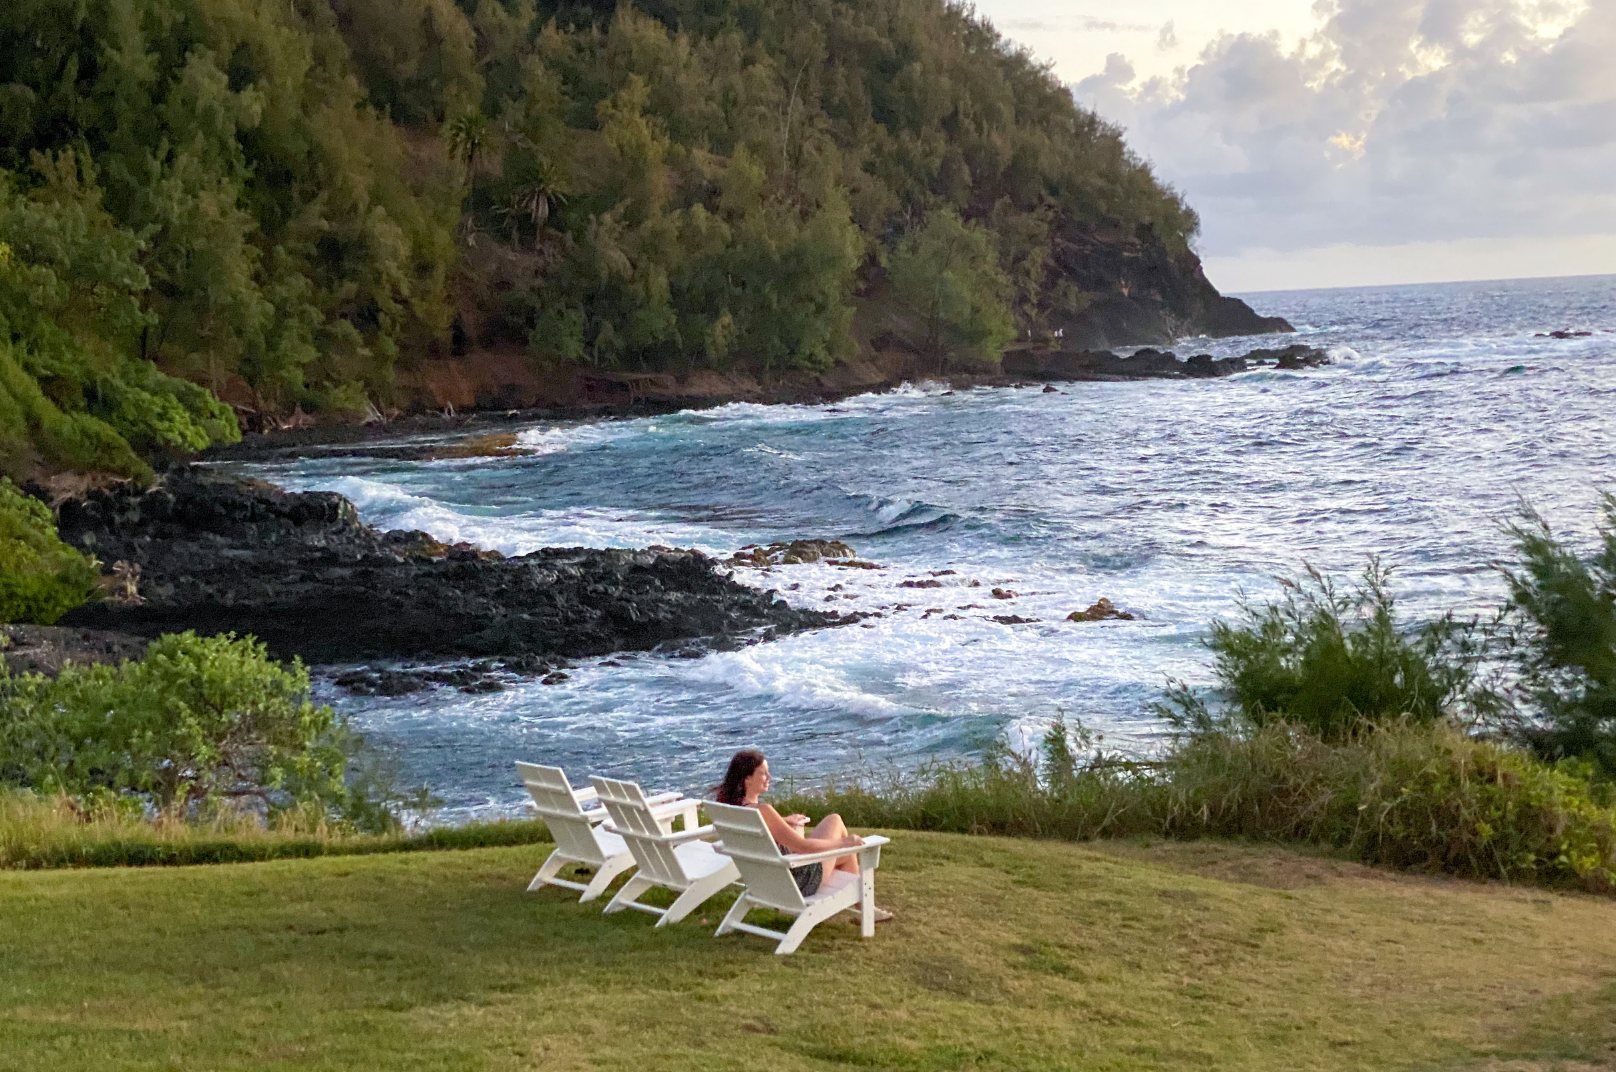 My Stay at the Hana-Maui Resort and Spa in Hawaii